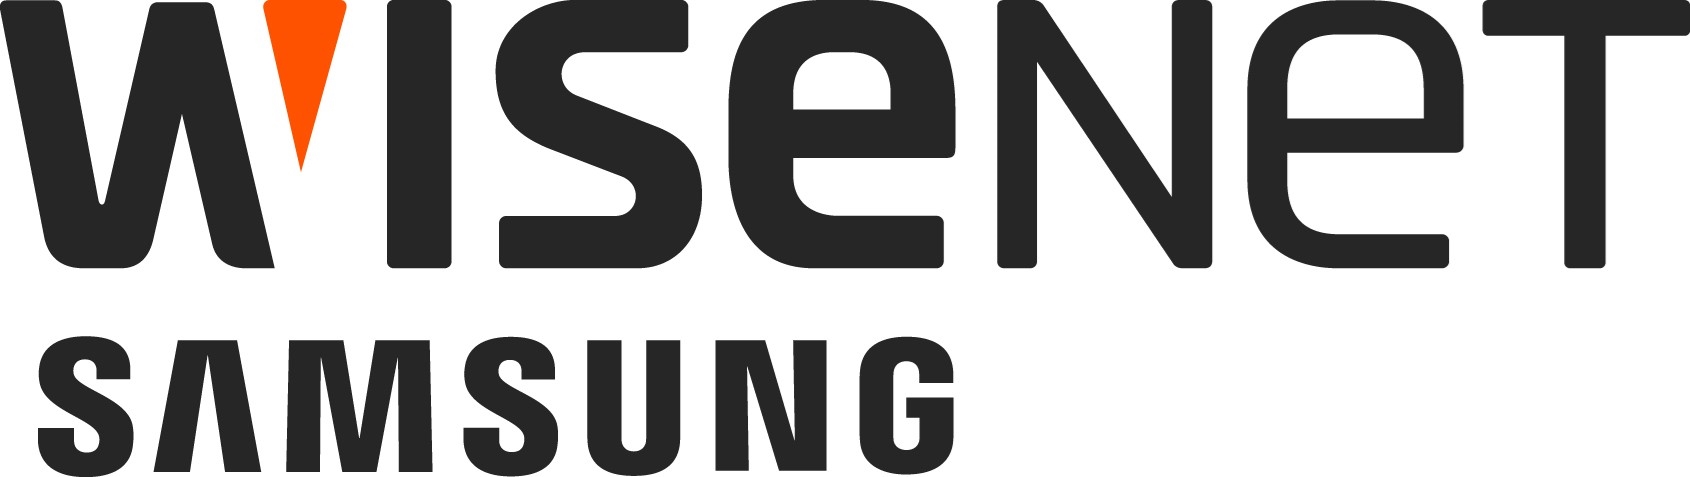 Wisenet samsung logo .png